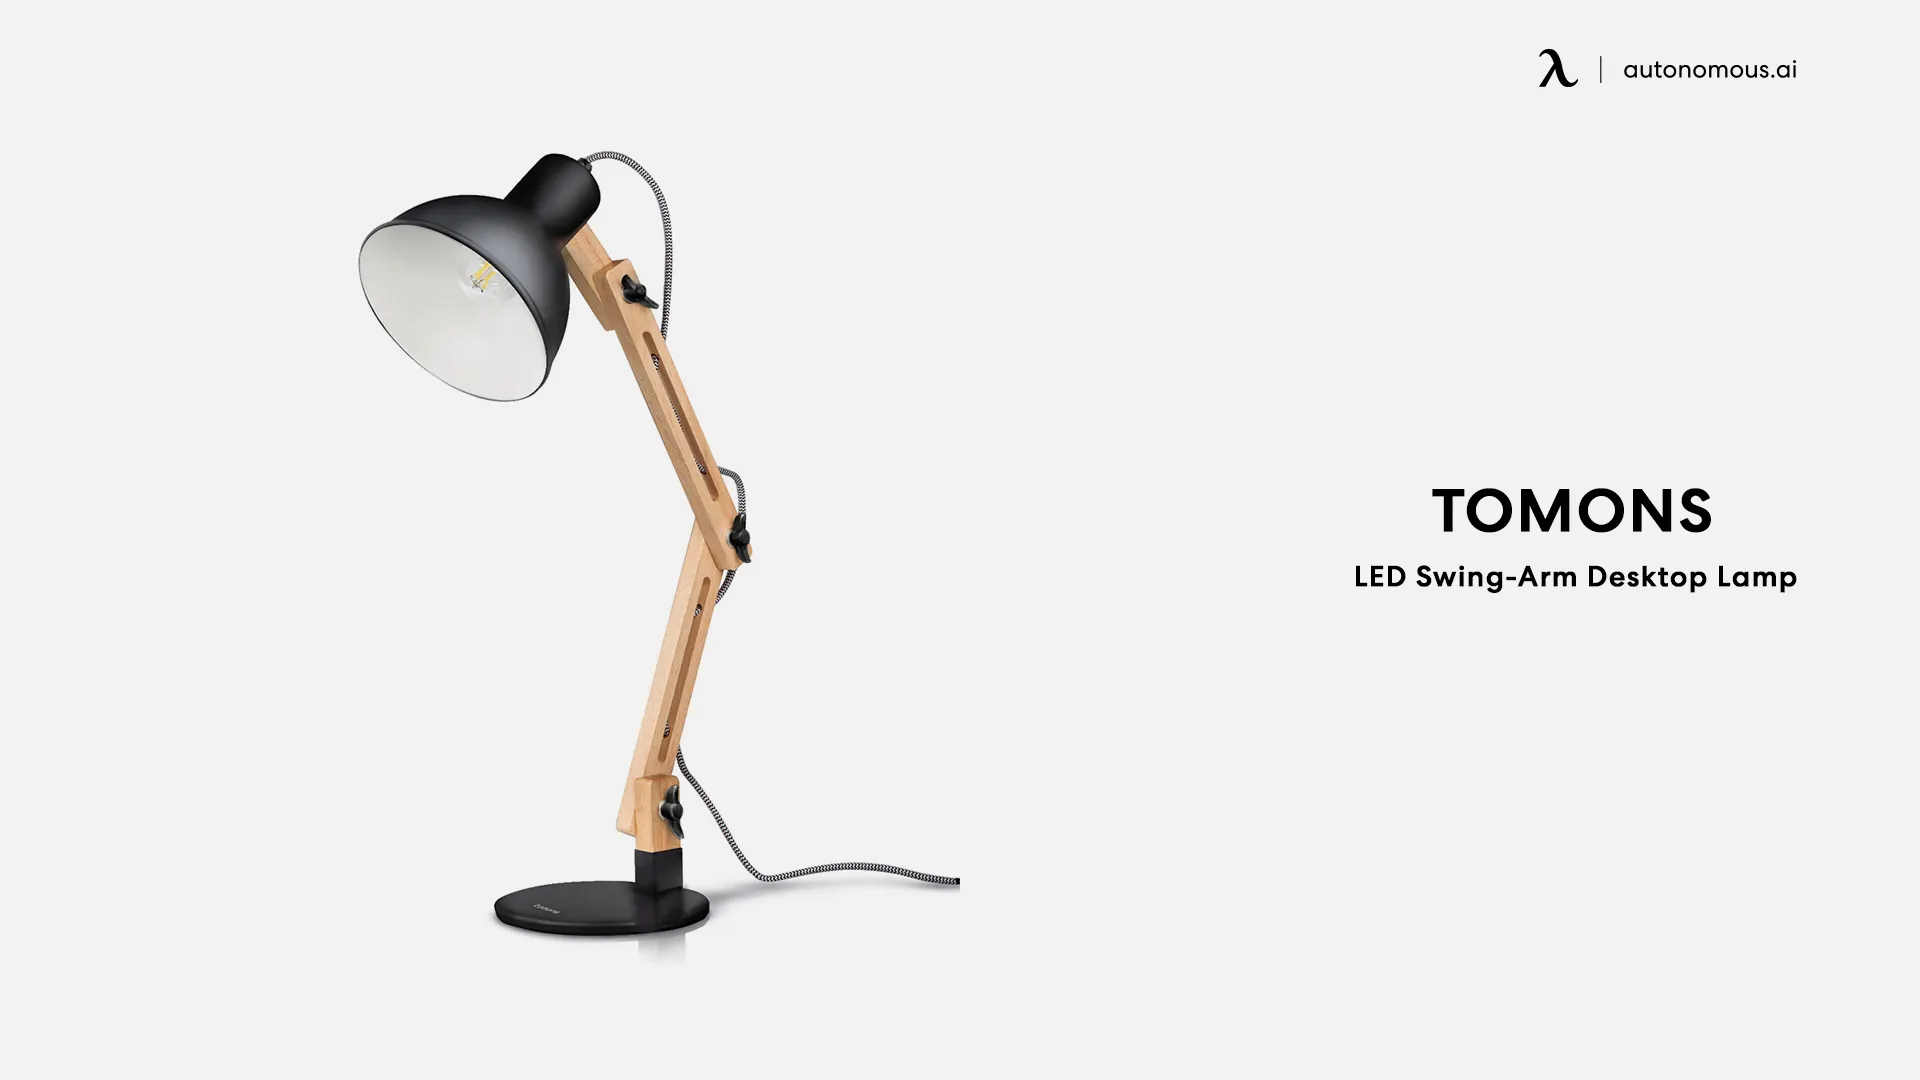 LED Swing-Arm Desktop Lamp by Tomons